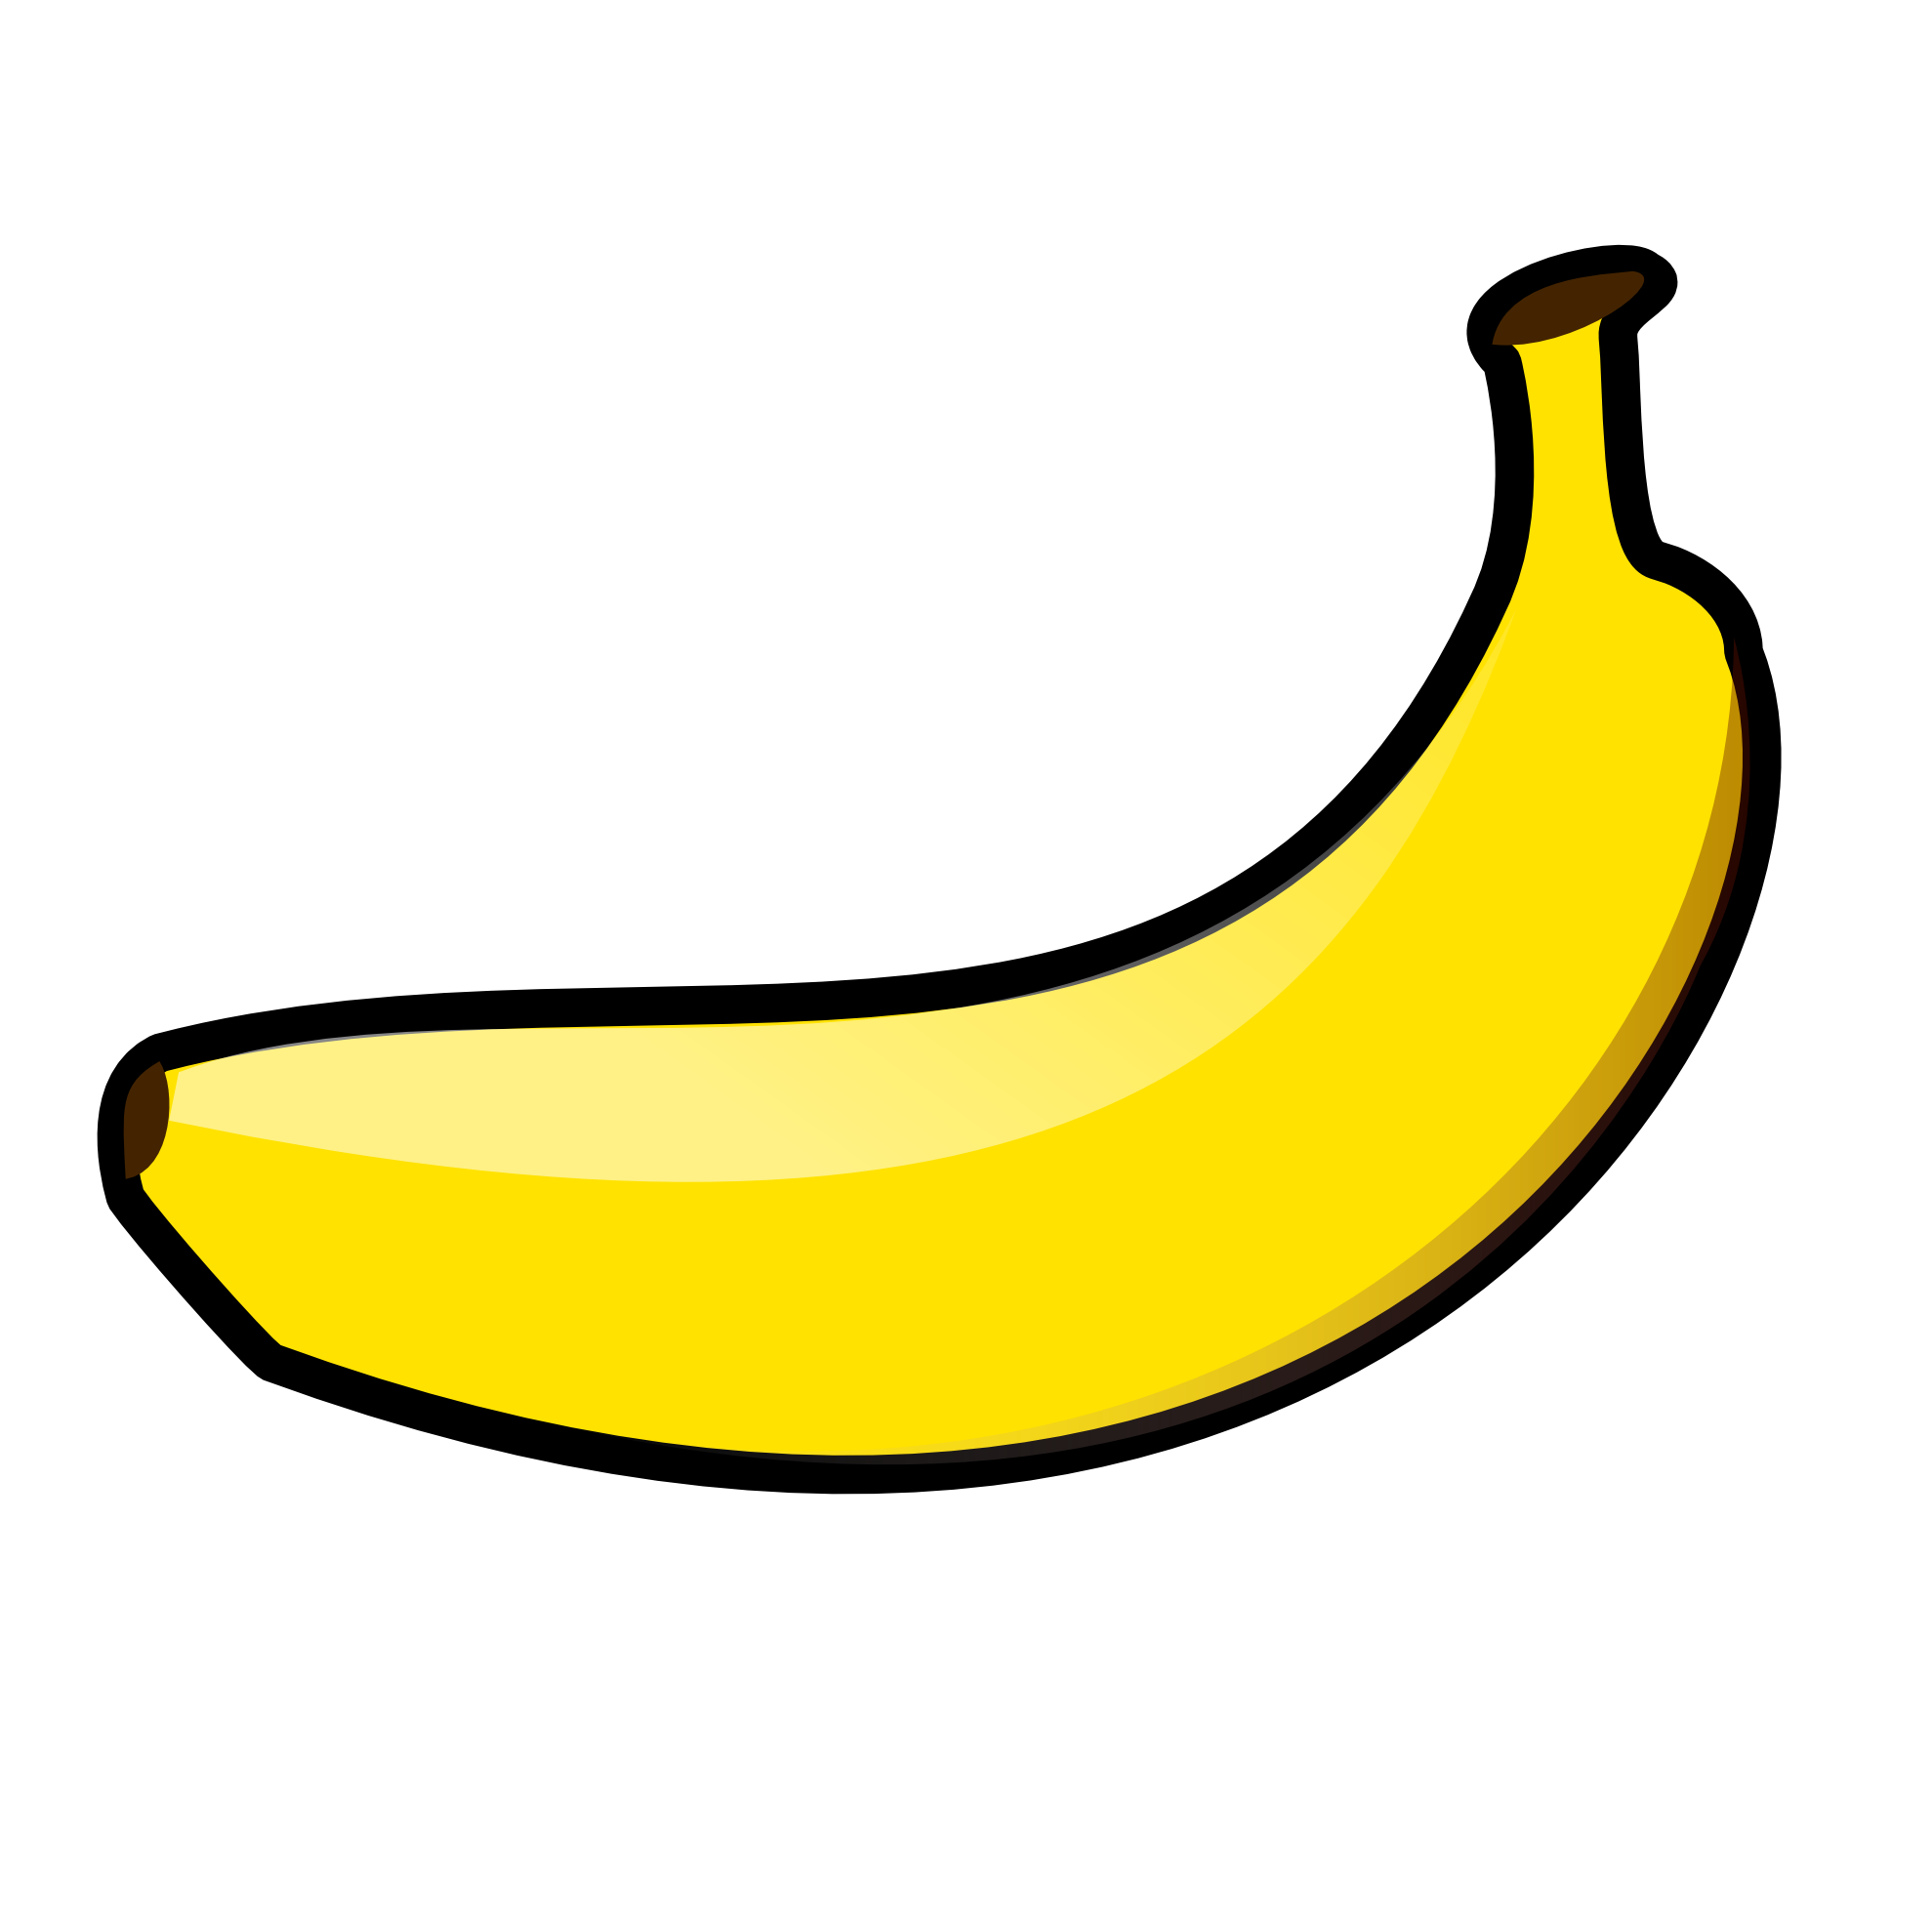 Banana clipart black.